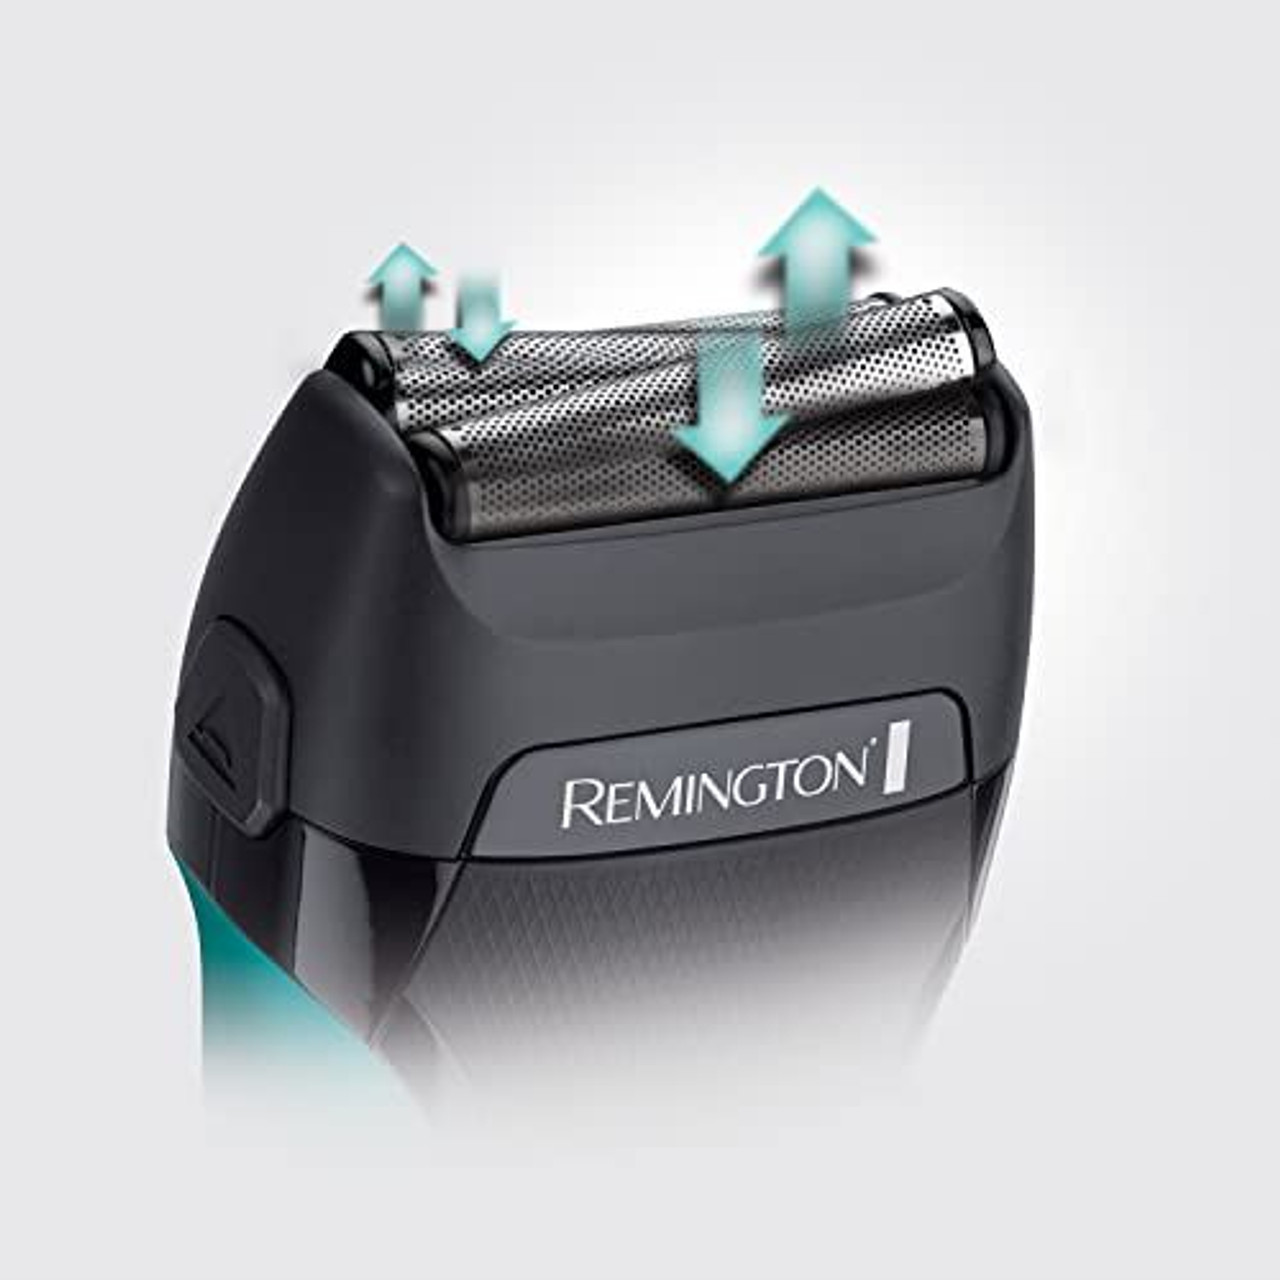 Remington F3000 F3 Series Style Foil Electric Shaver